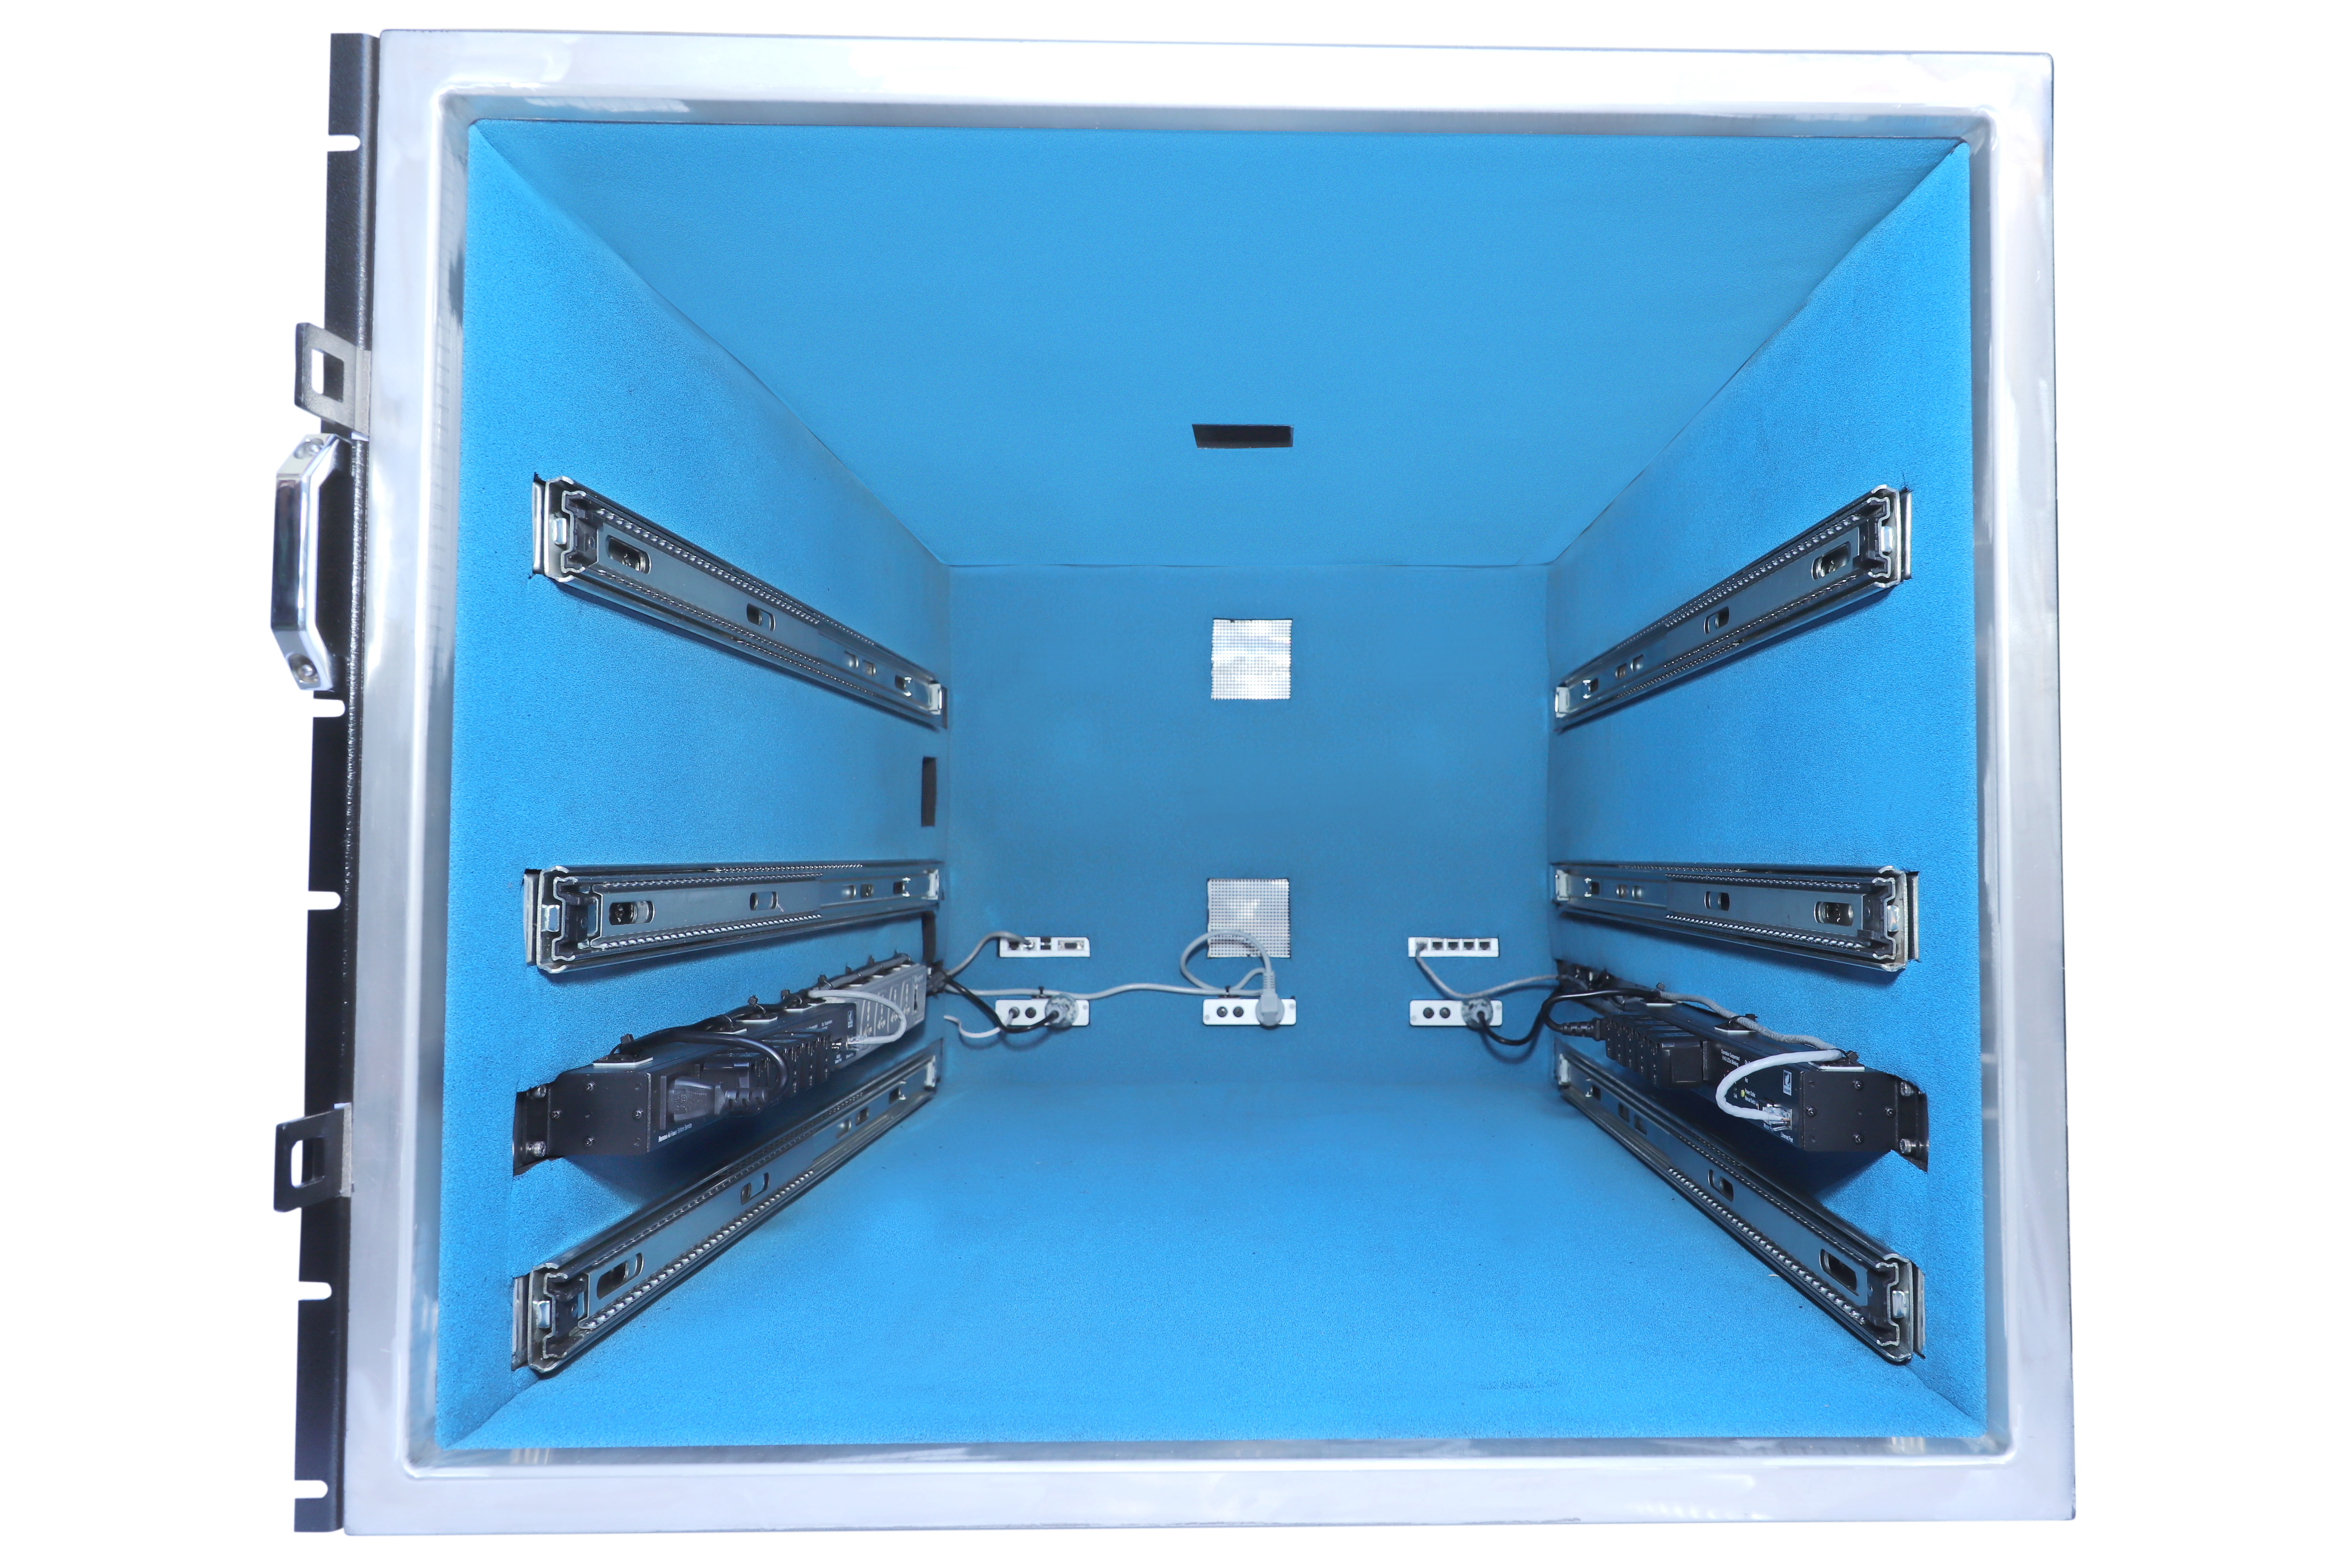 HDRF-2070-A RF Shield Test Box